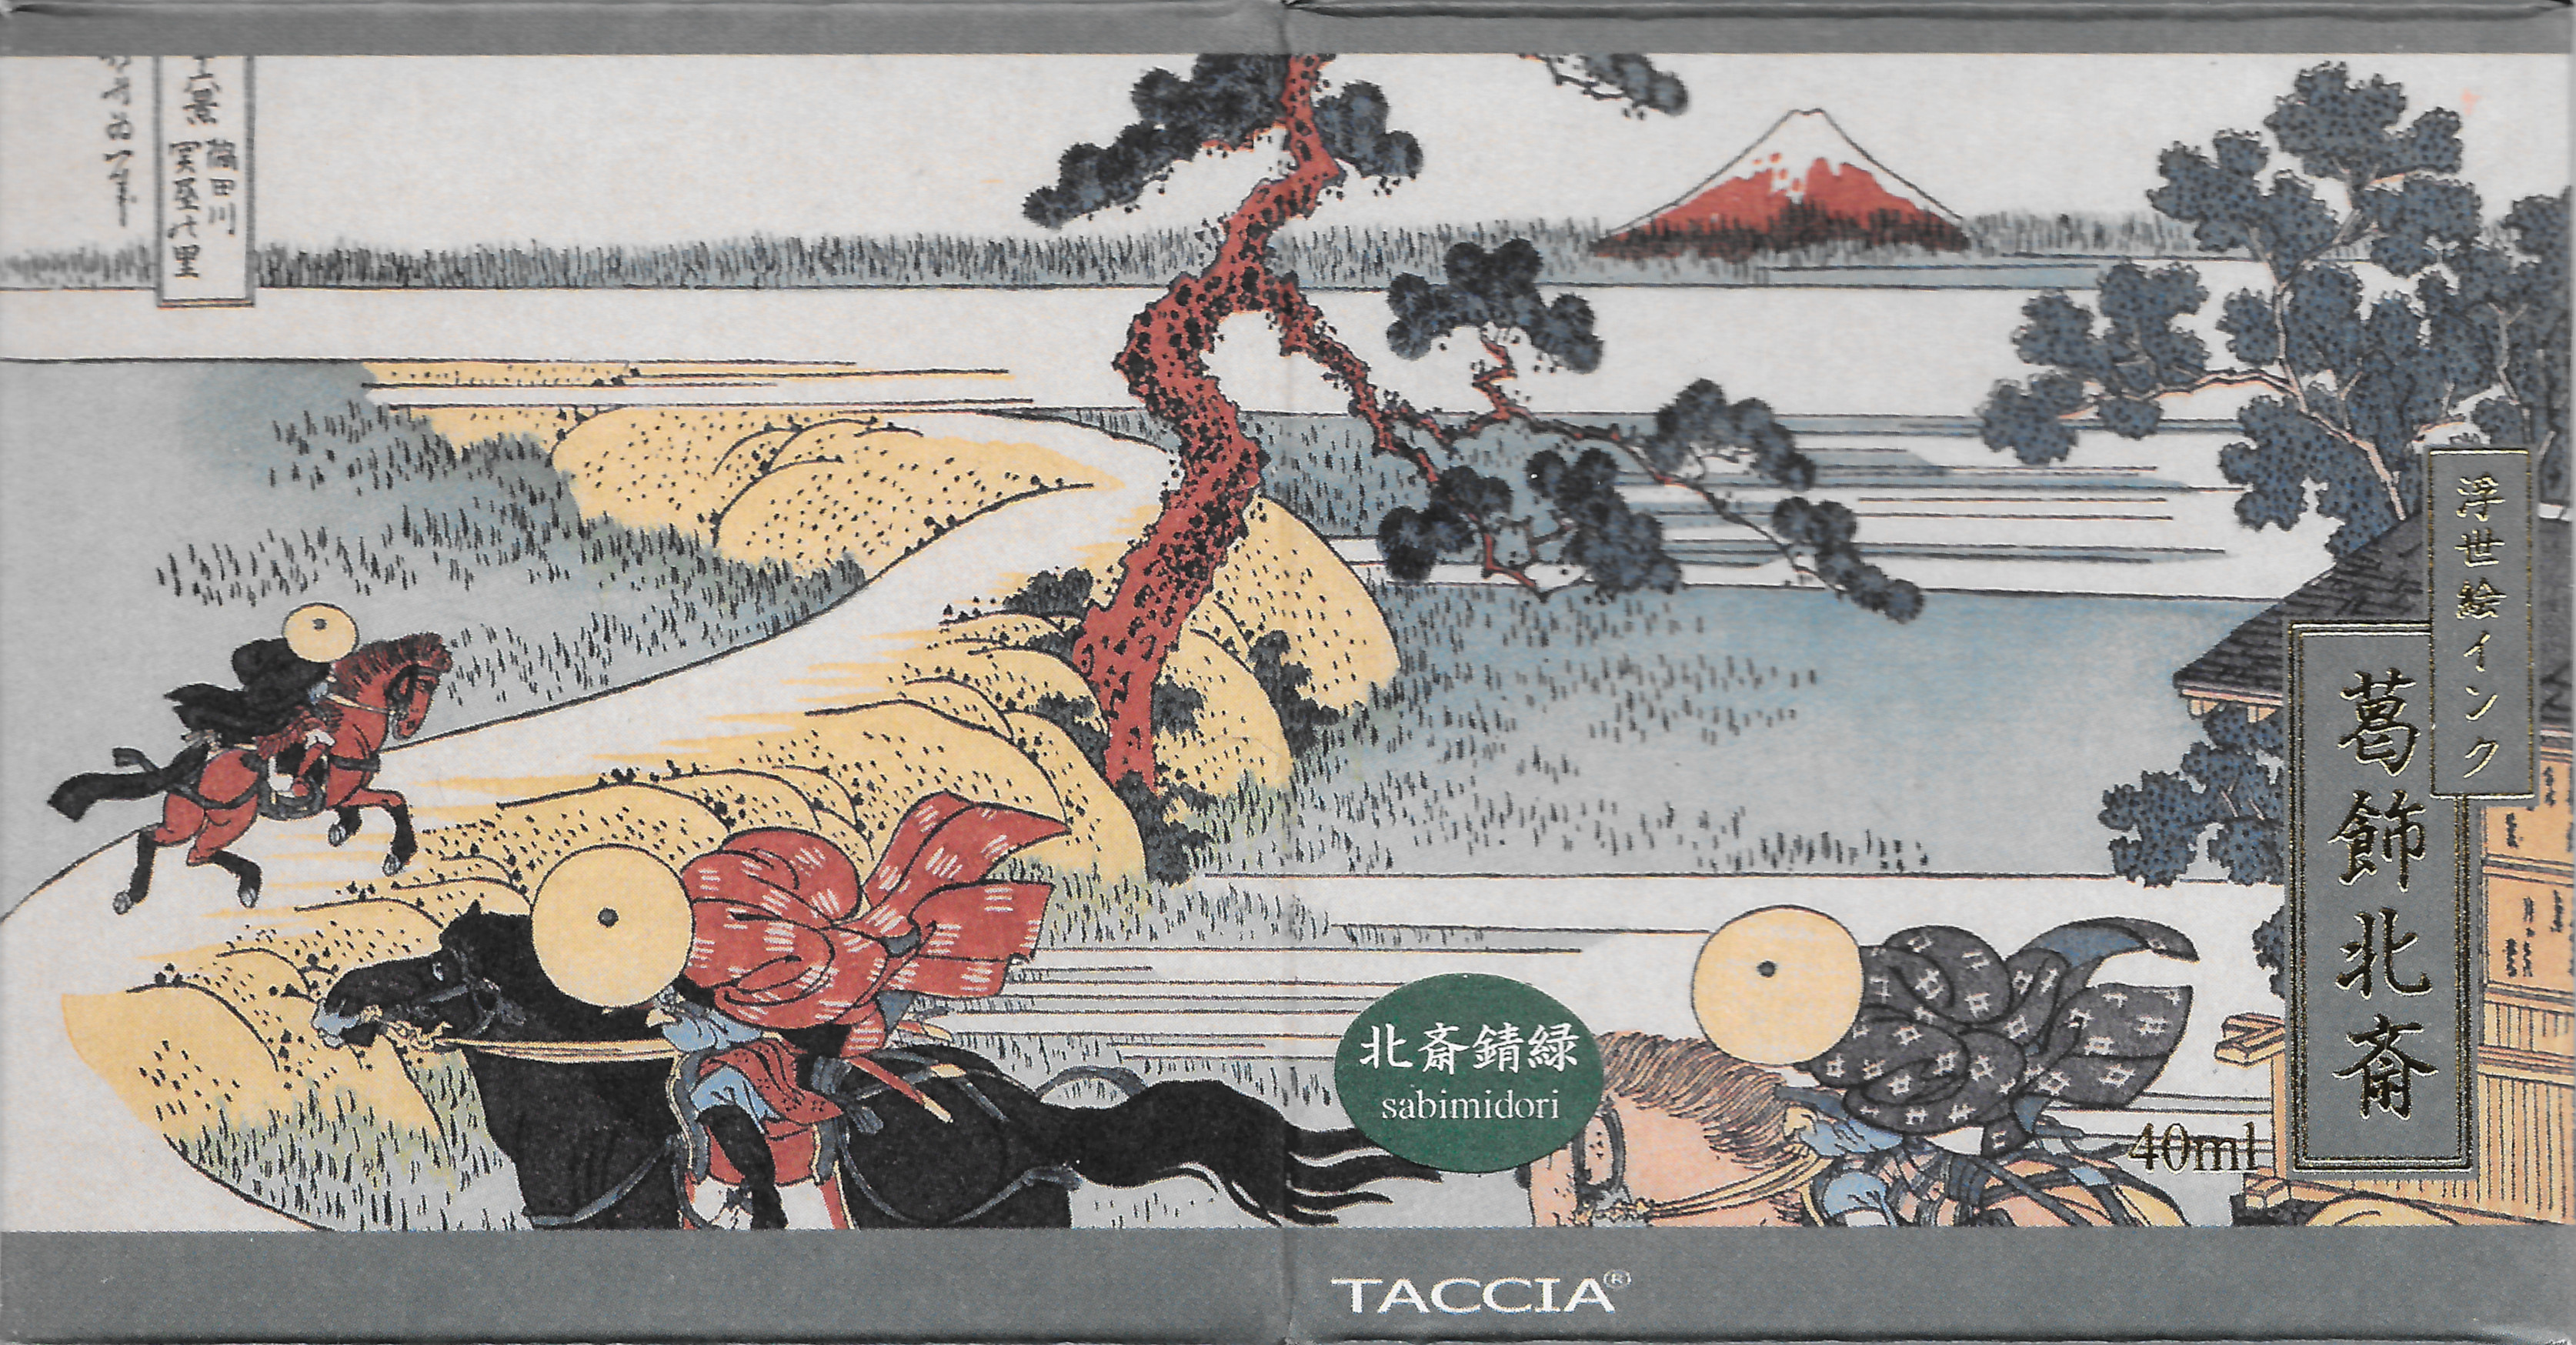 Packaging of Taccia Hokusai Sabimidori.